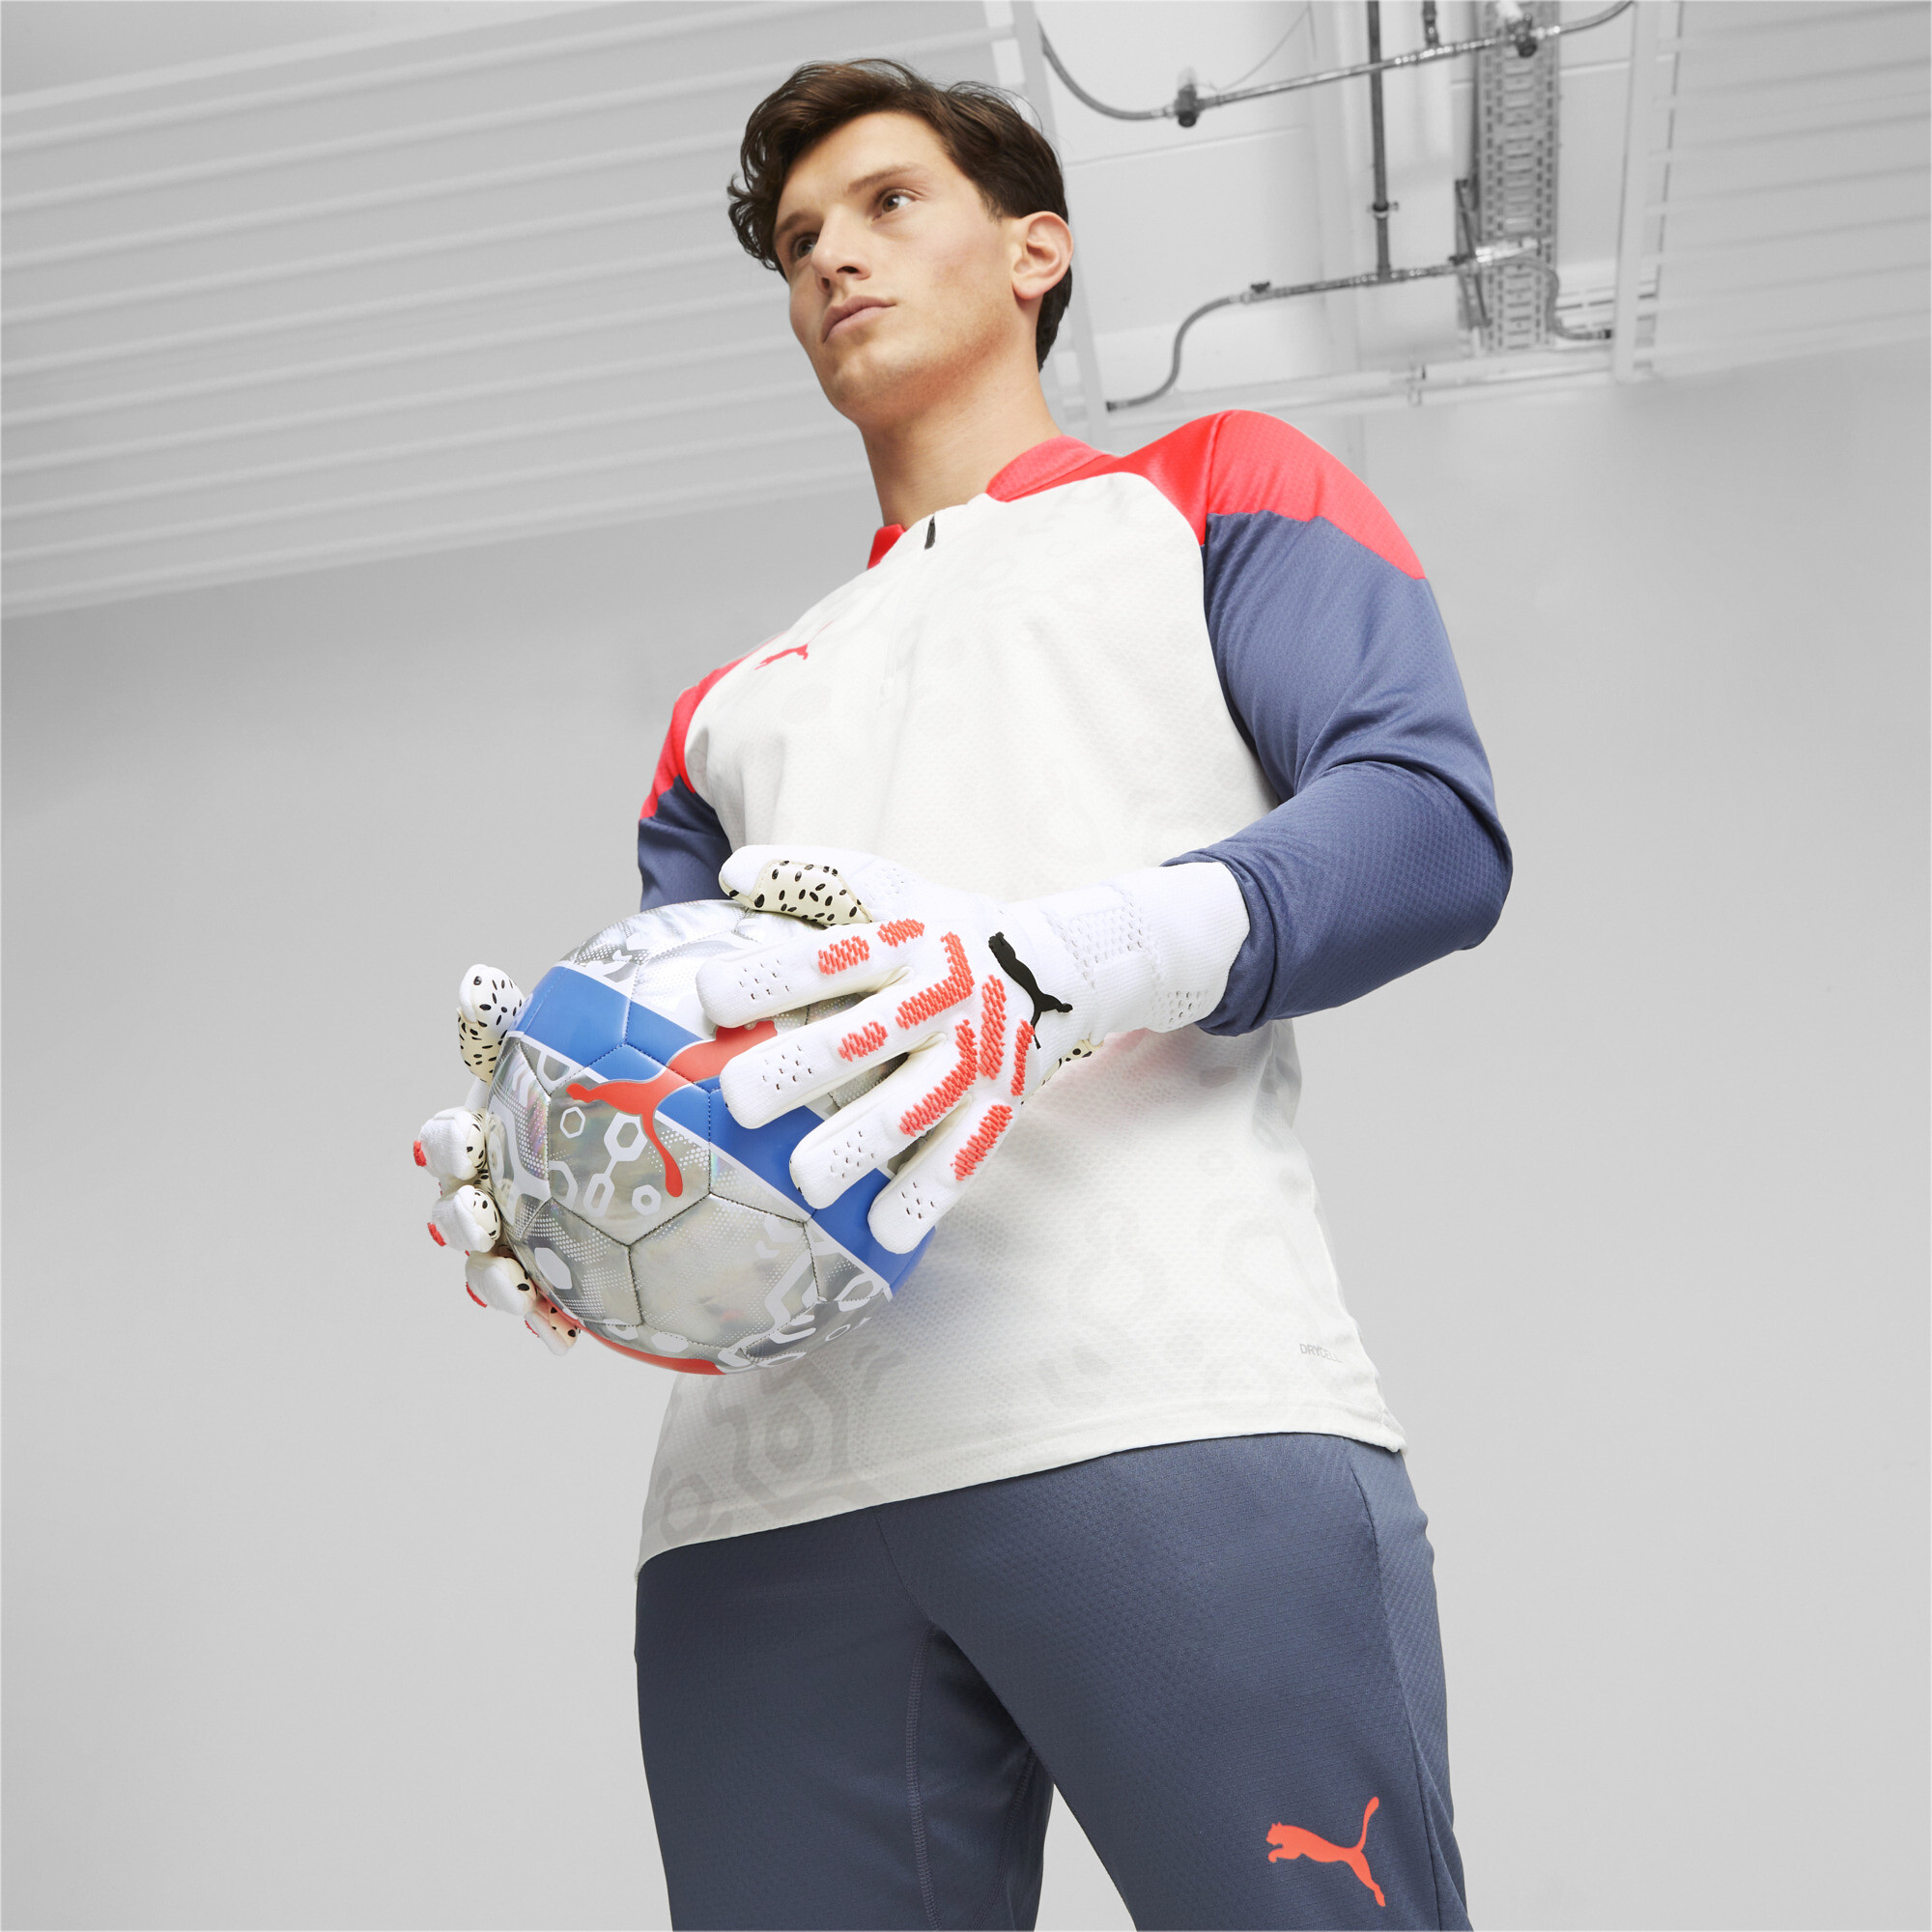 Men's Puma FUTURE Ultimate Negative Cut Football Goalkeeper Gloves, White, Size 8.5, Accessories